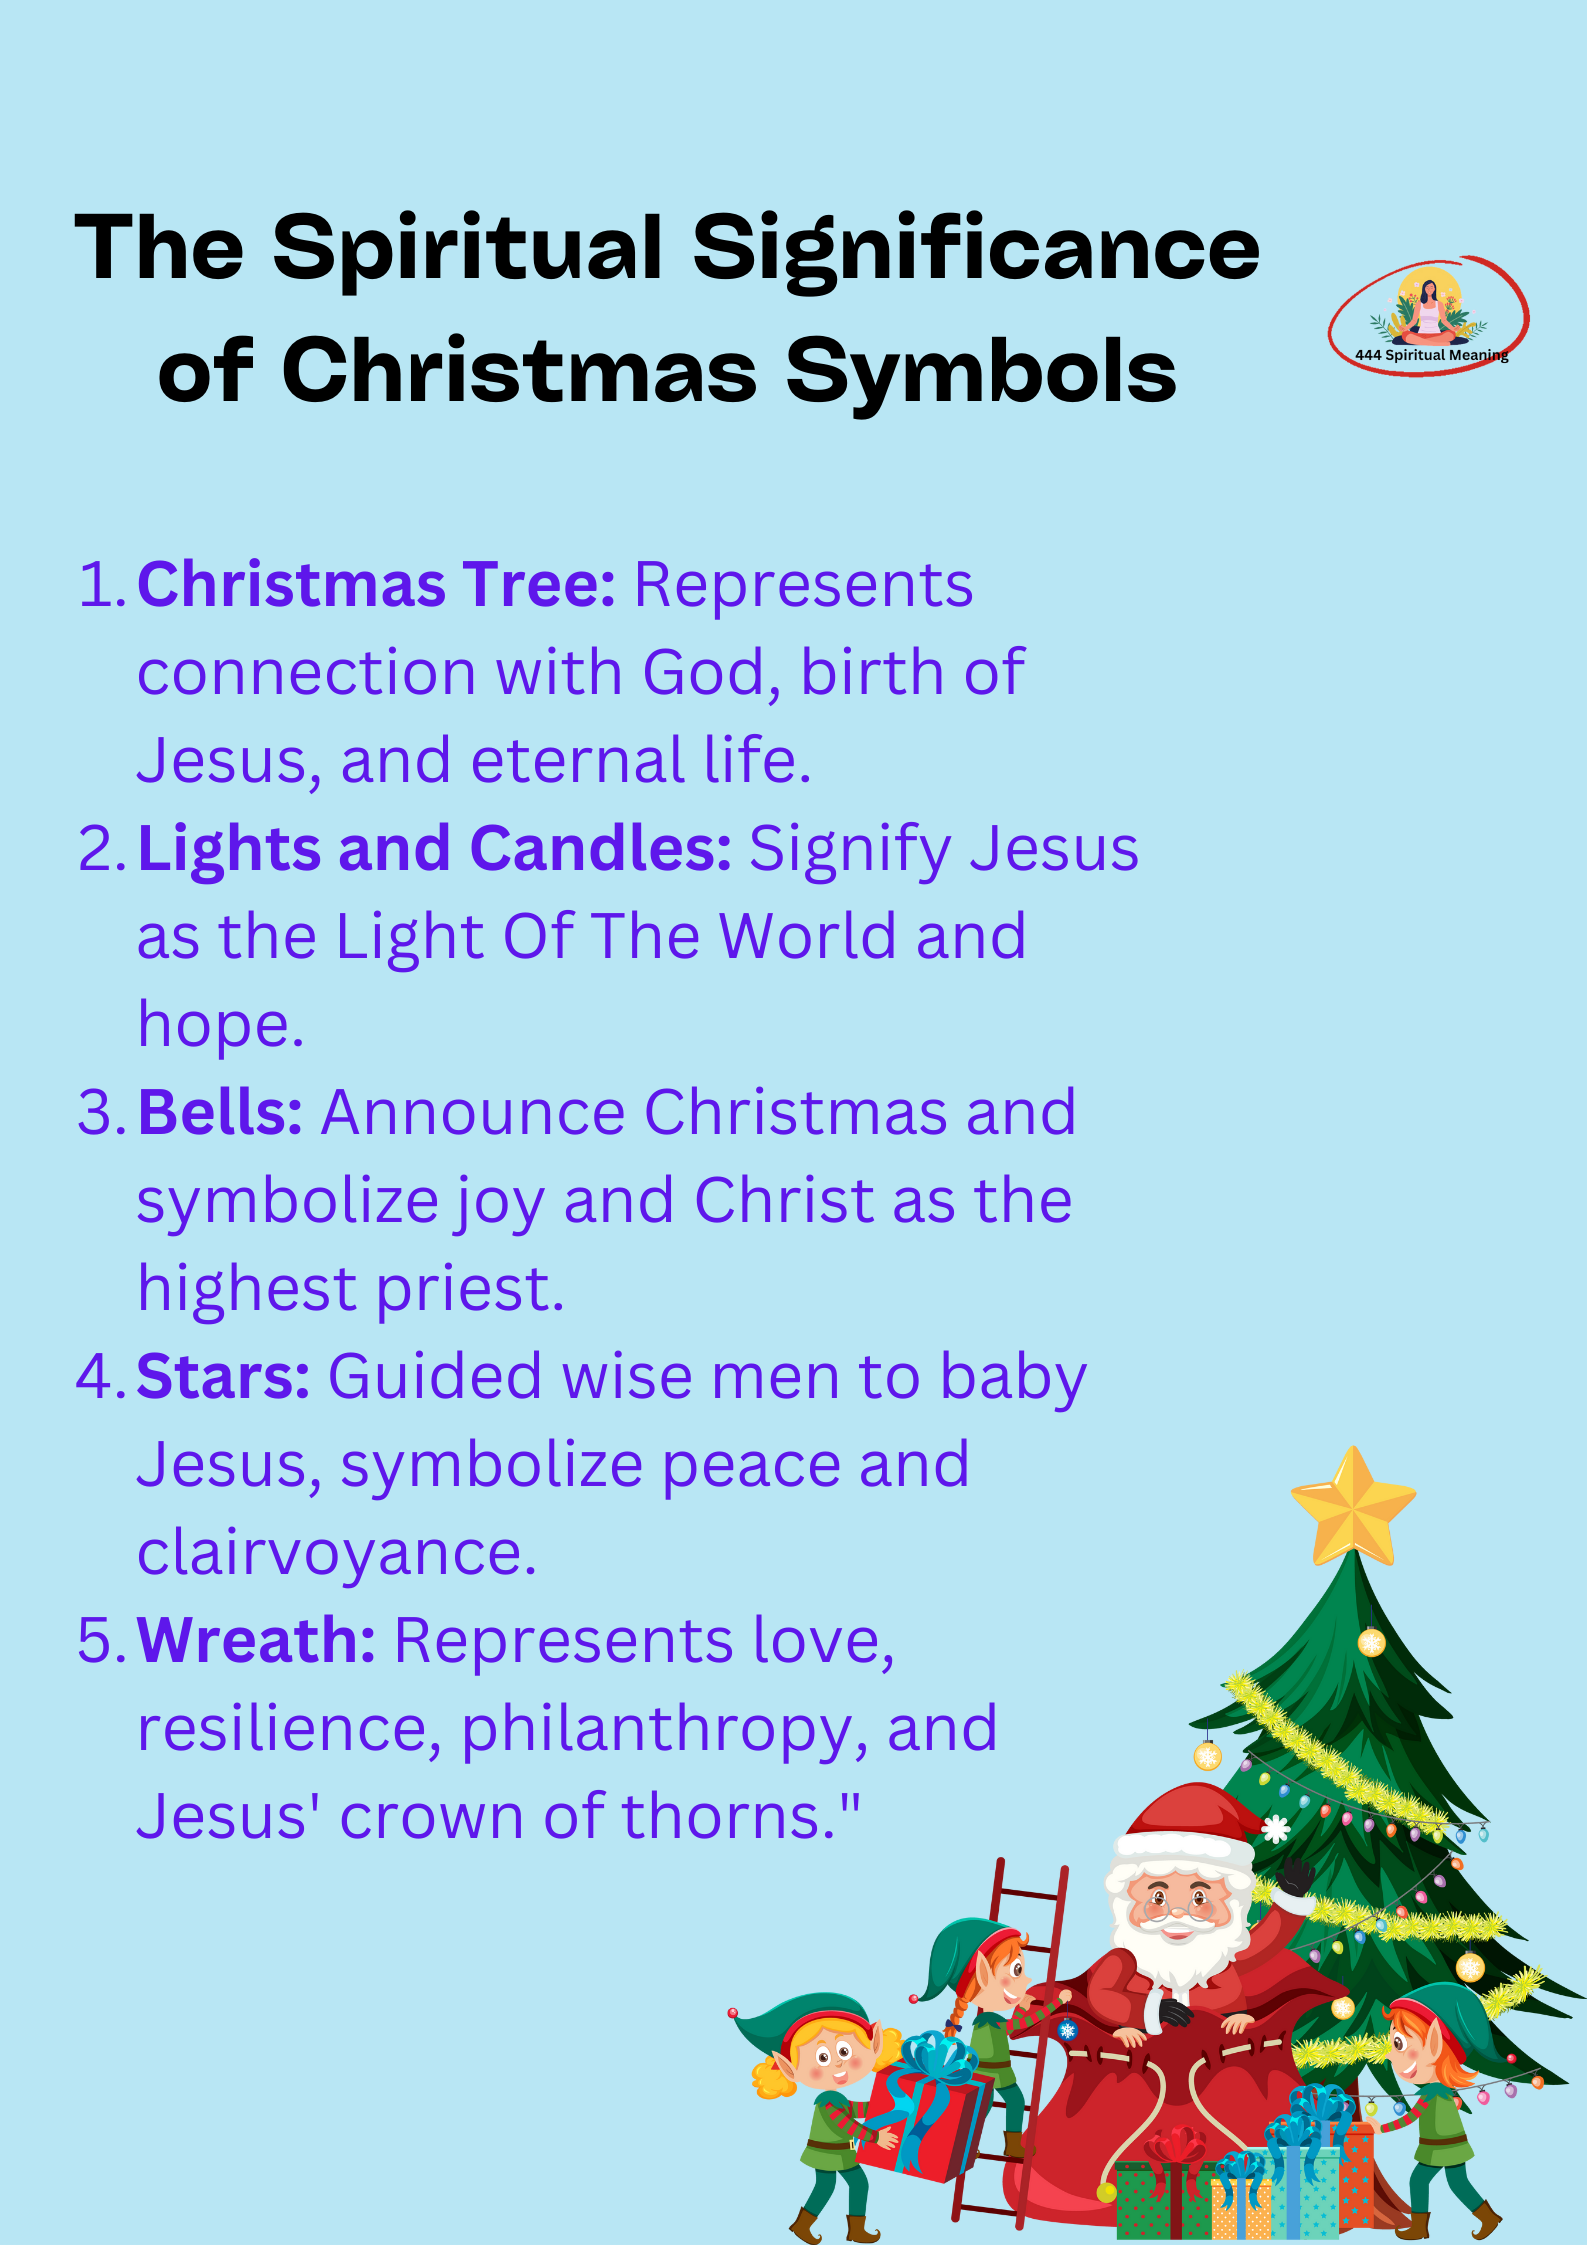 The Spiritual Significance of Christmas Symbols